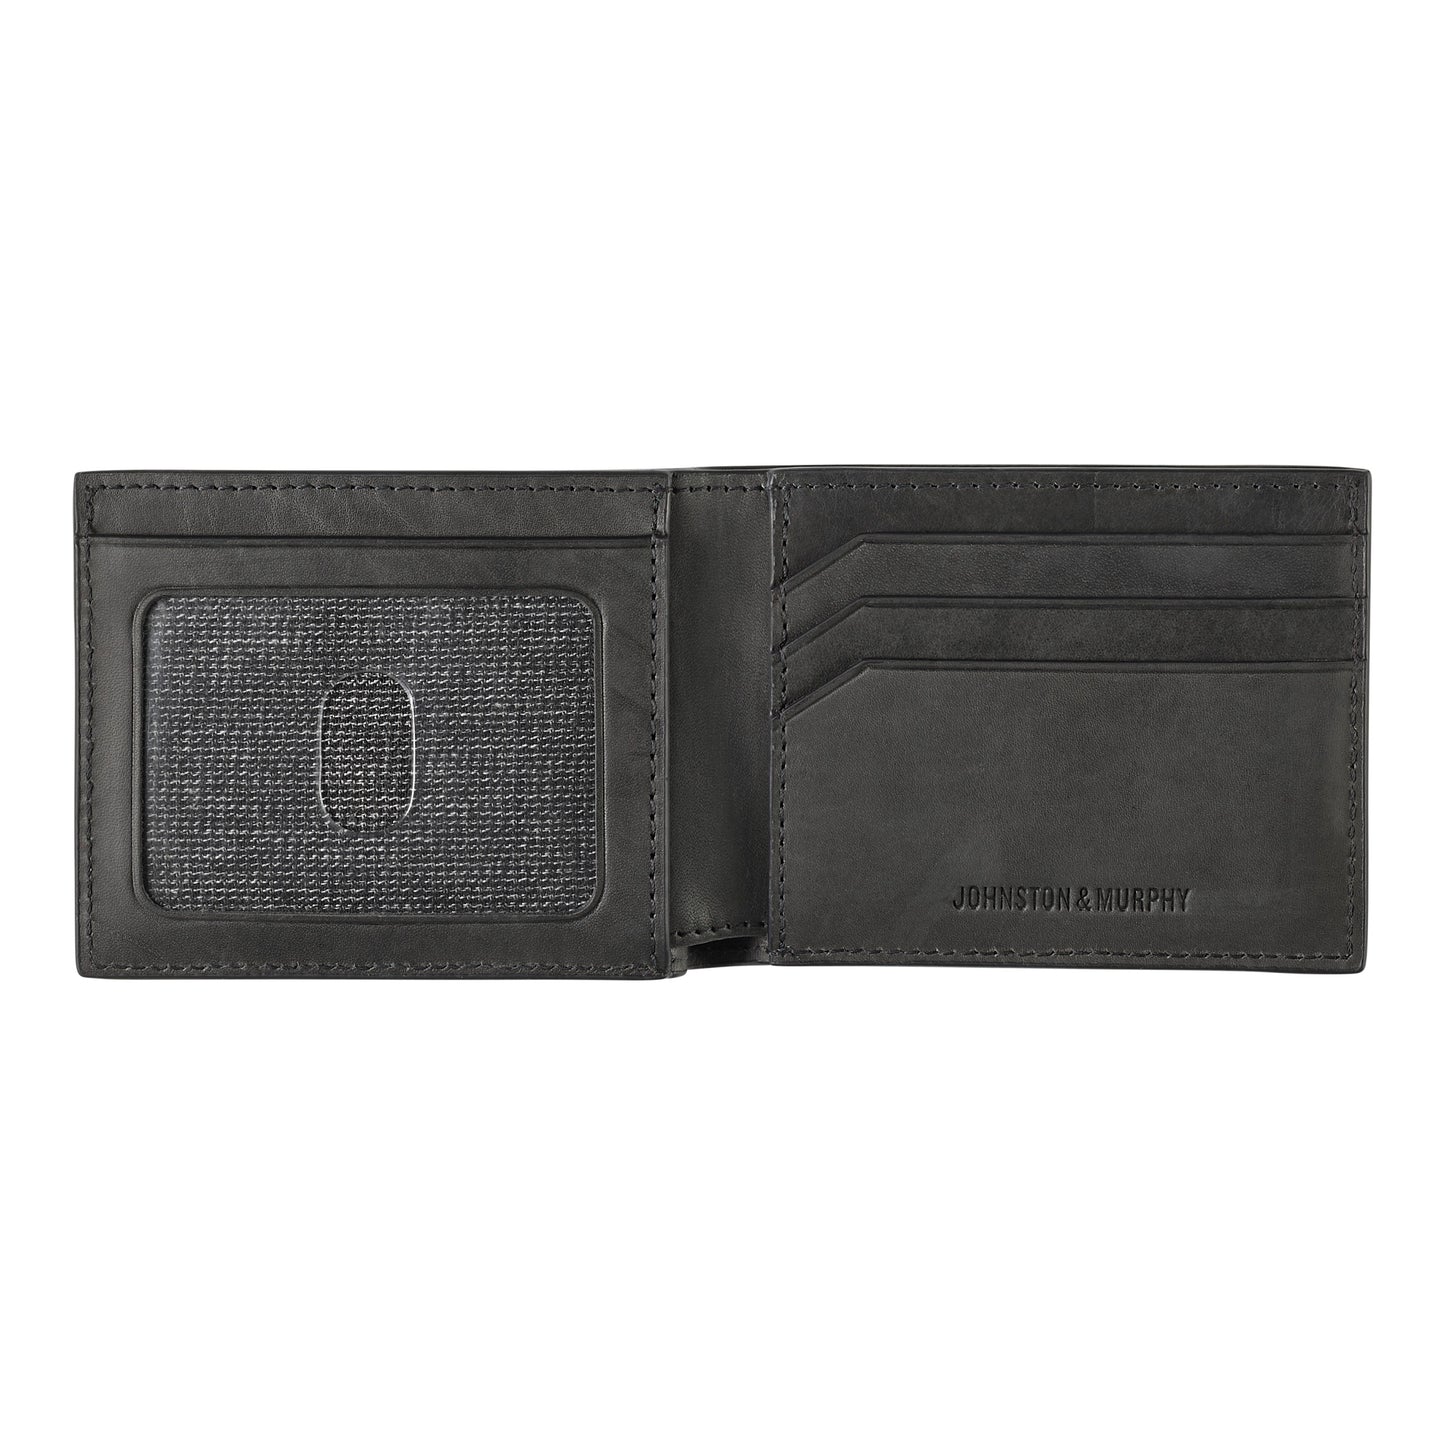 Johnston & Murphy Rhodes Billfold Wallet in Black Full Grain Leather